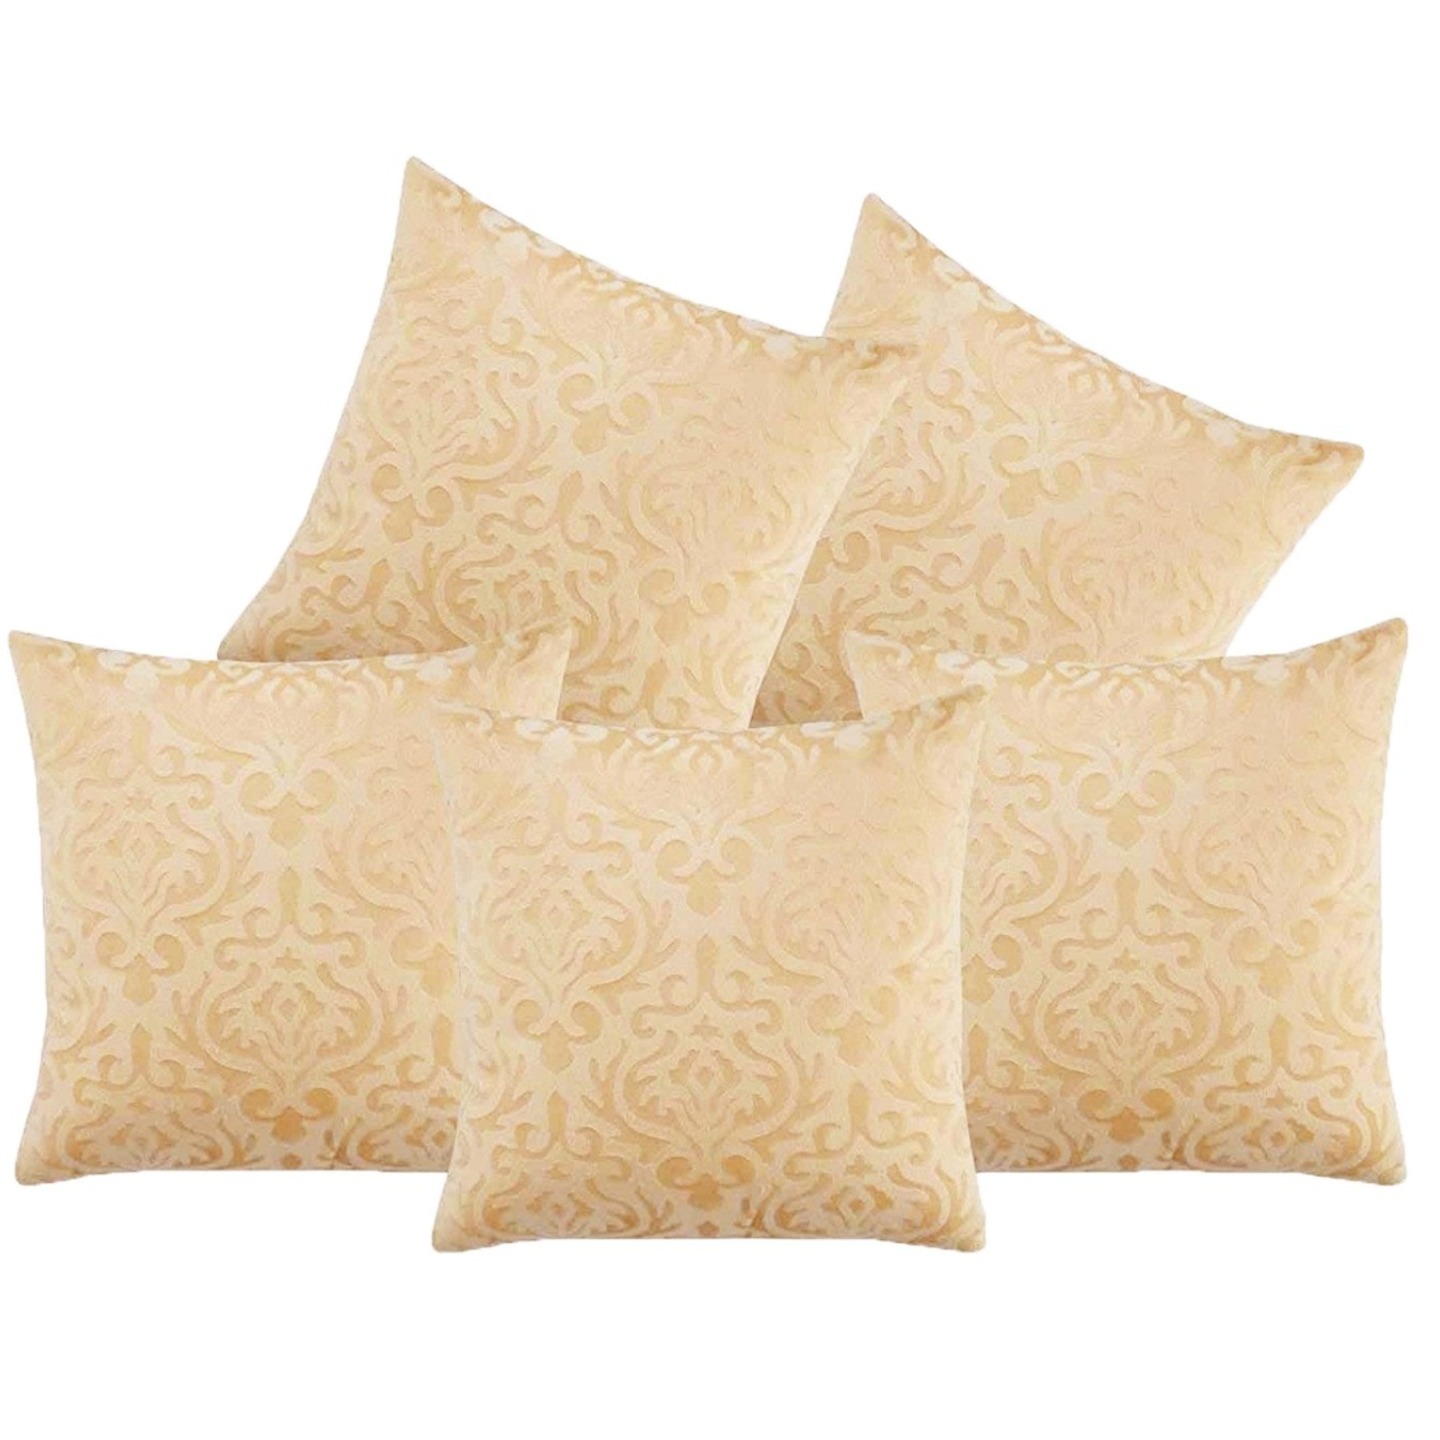 Handtex Home Velvet Cushion Covers 40.64x40.64 cm16x16 inches, - Set of 5  Beige